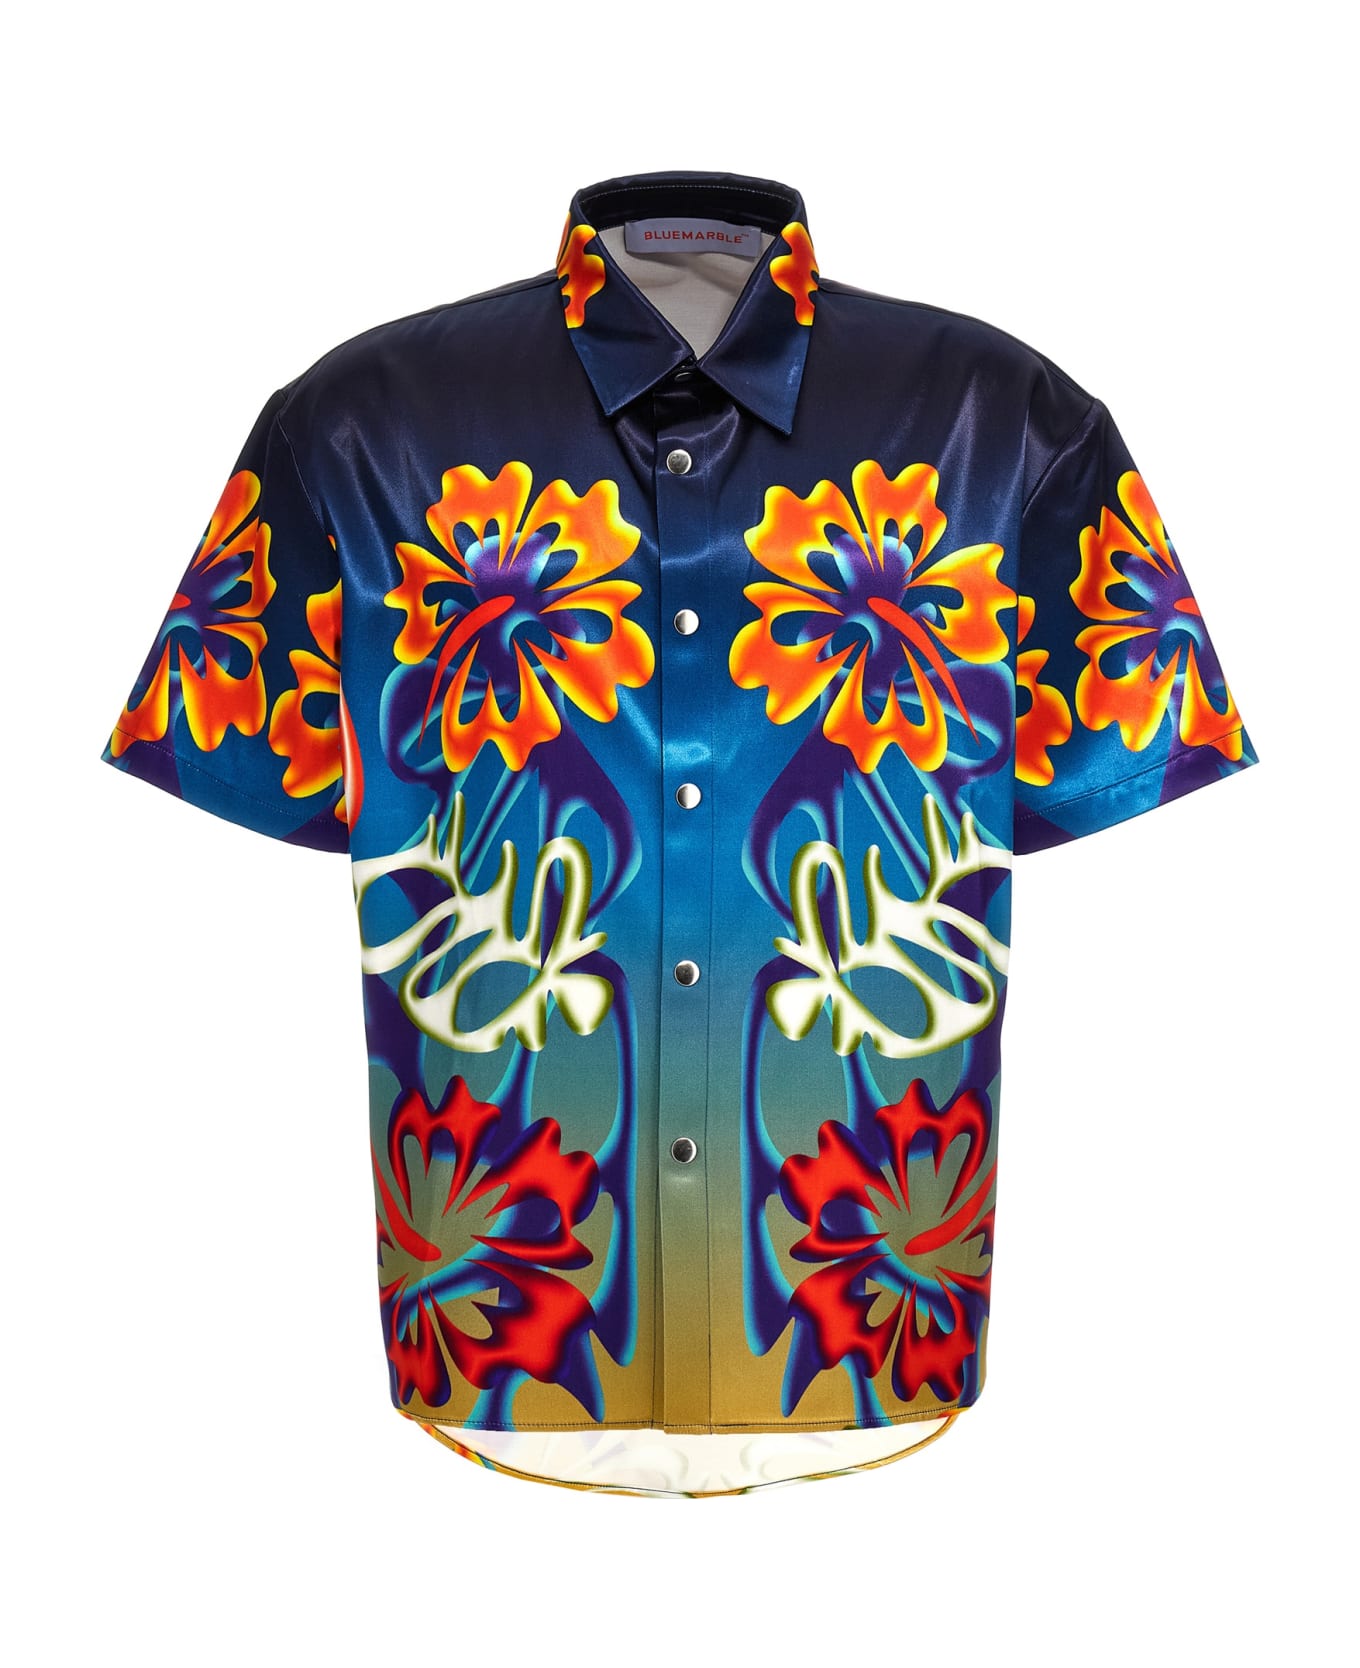 Bluemarble 'hibiscus' Shirt - Multicolor